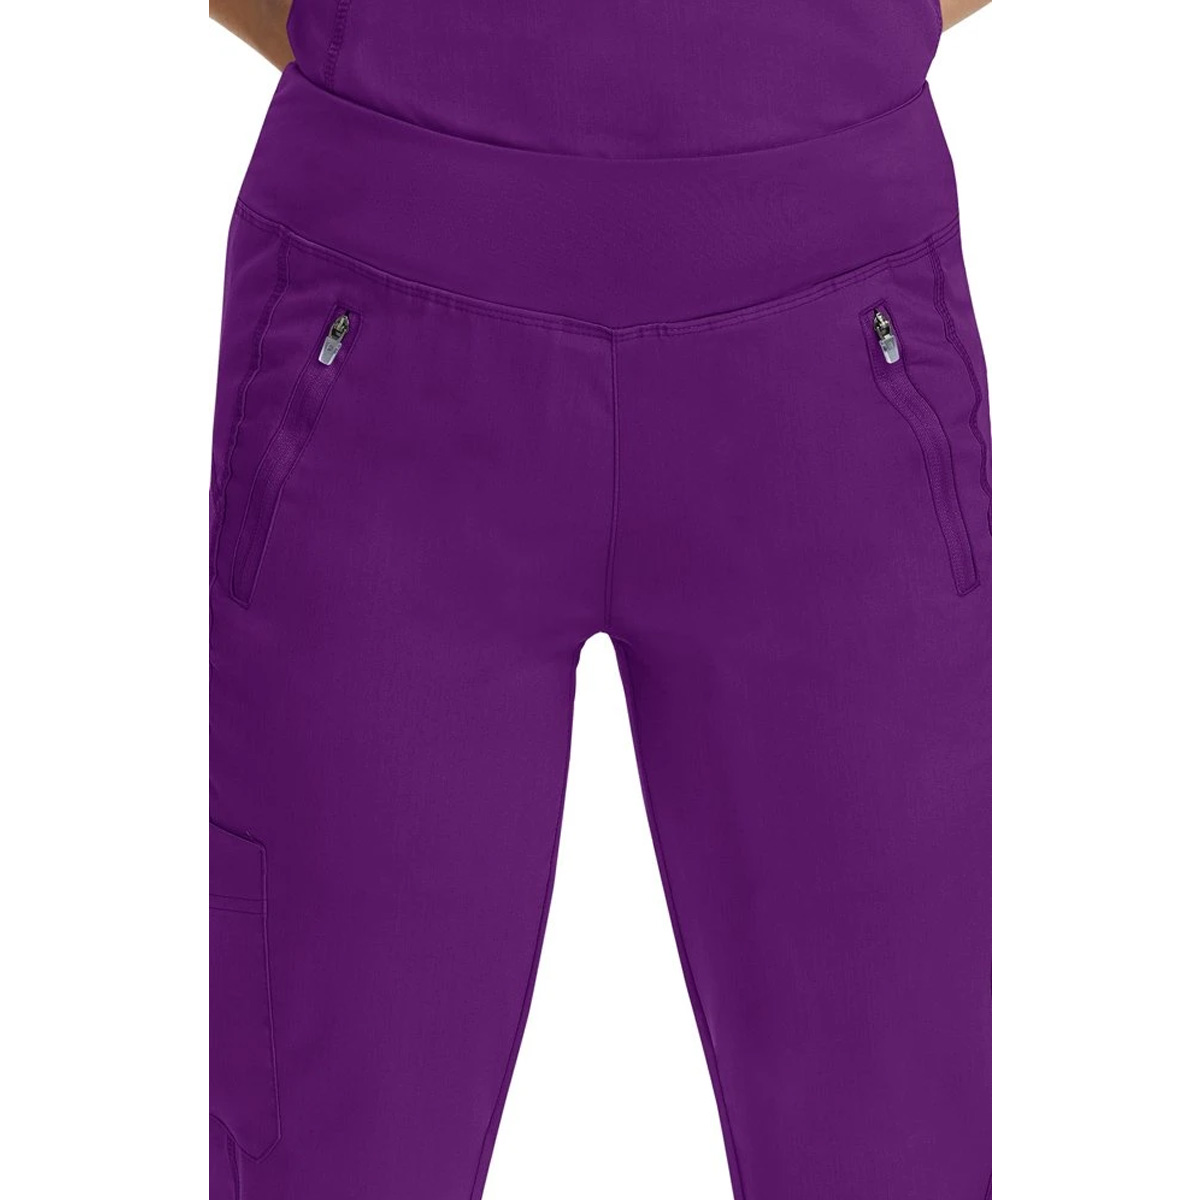 Healing Hands Scrubs Purple Label Tori Yoga Pants